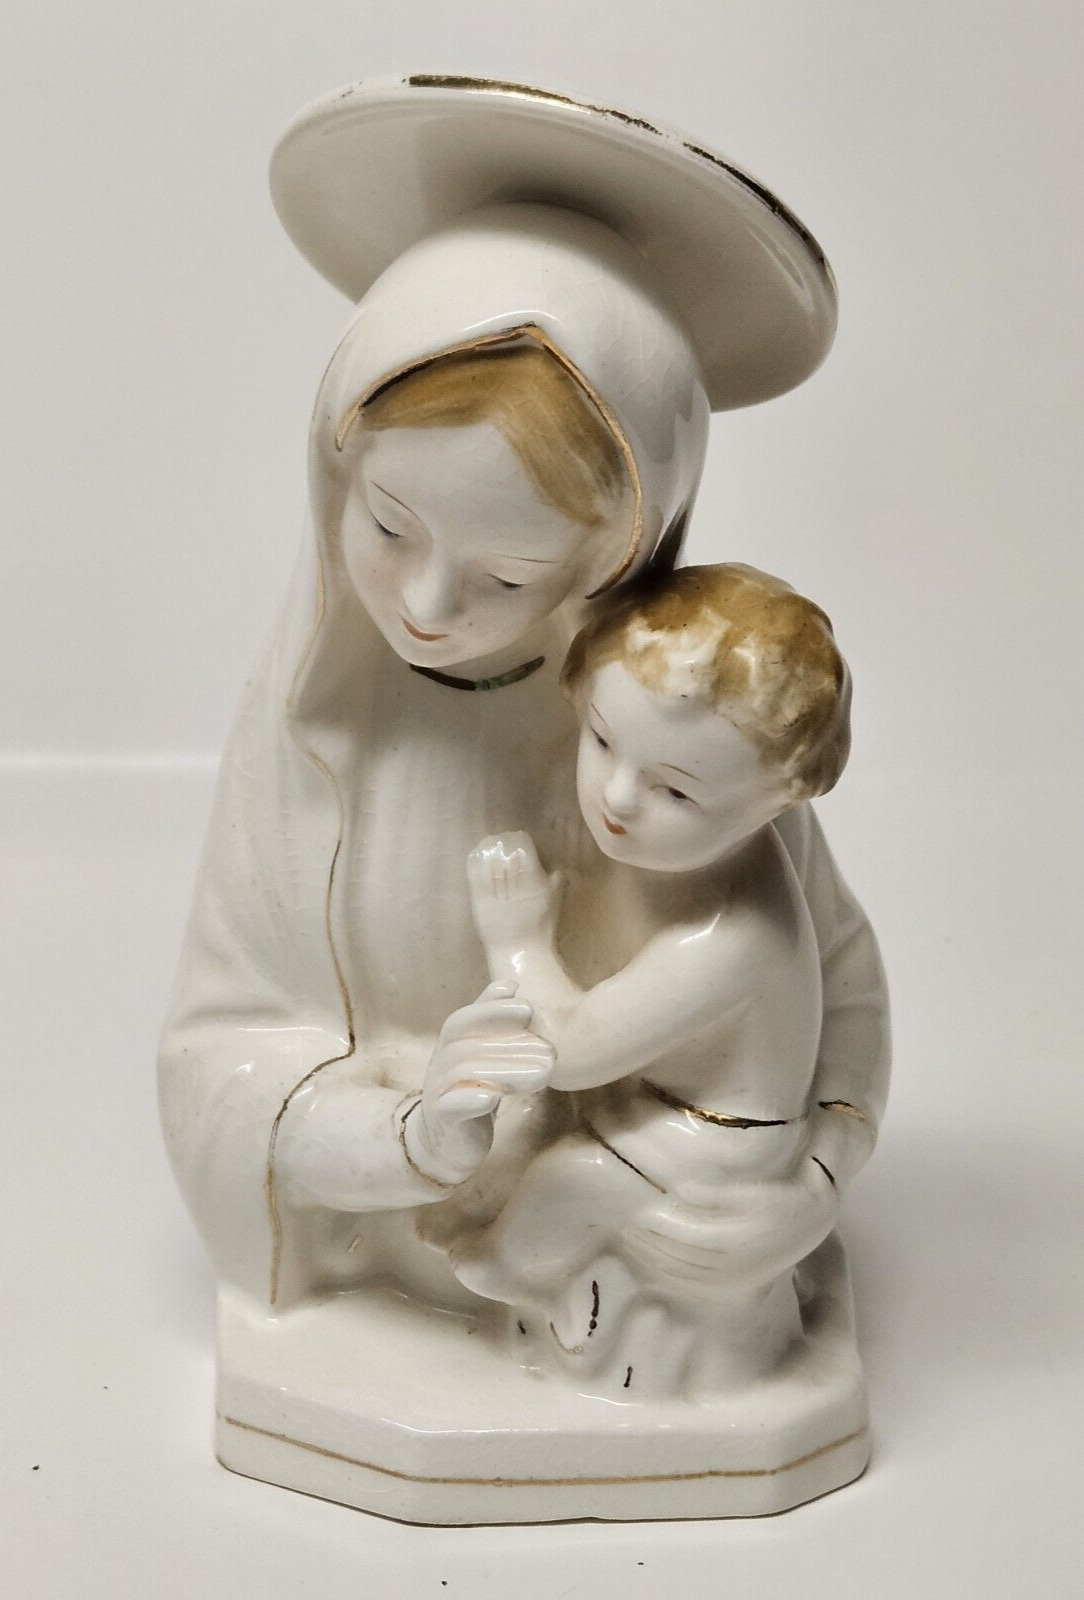 Orion Vintage Virgin Mary Madonna and Baby Jesus Porcelain Figurine Japan